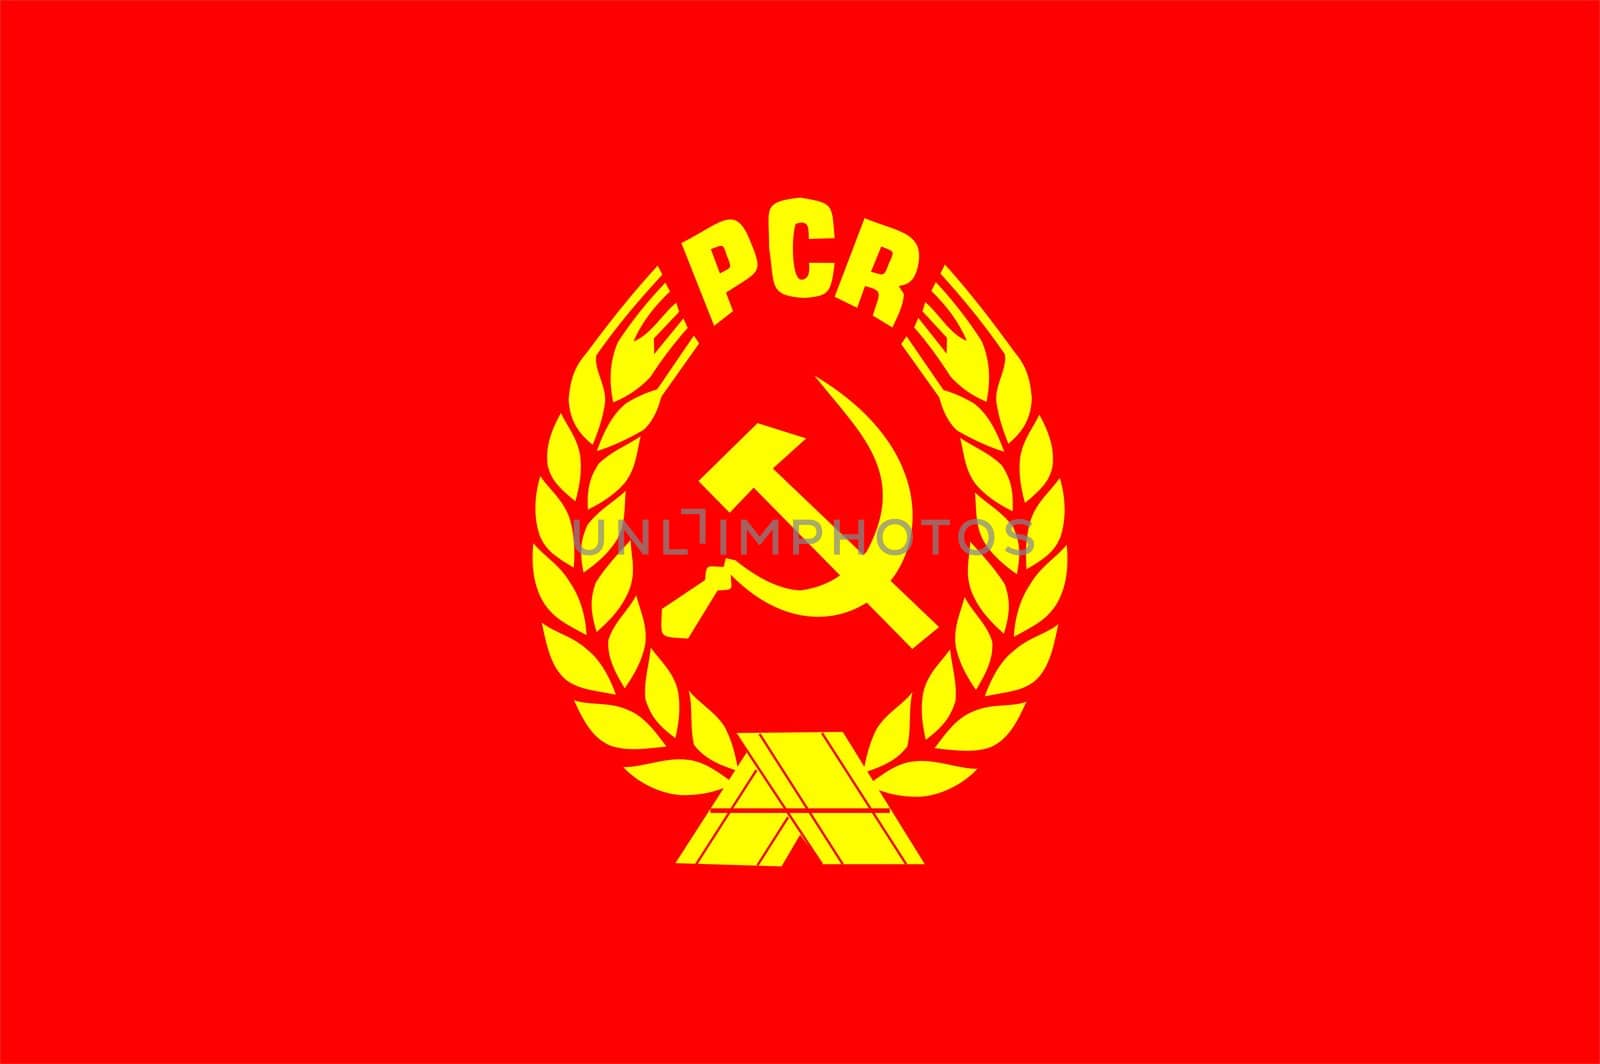 Romanian Comunist Party Pcr by tony4urban